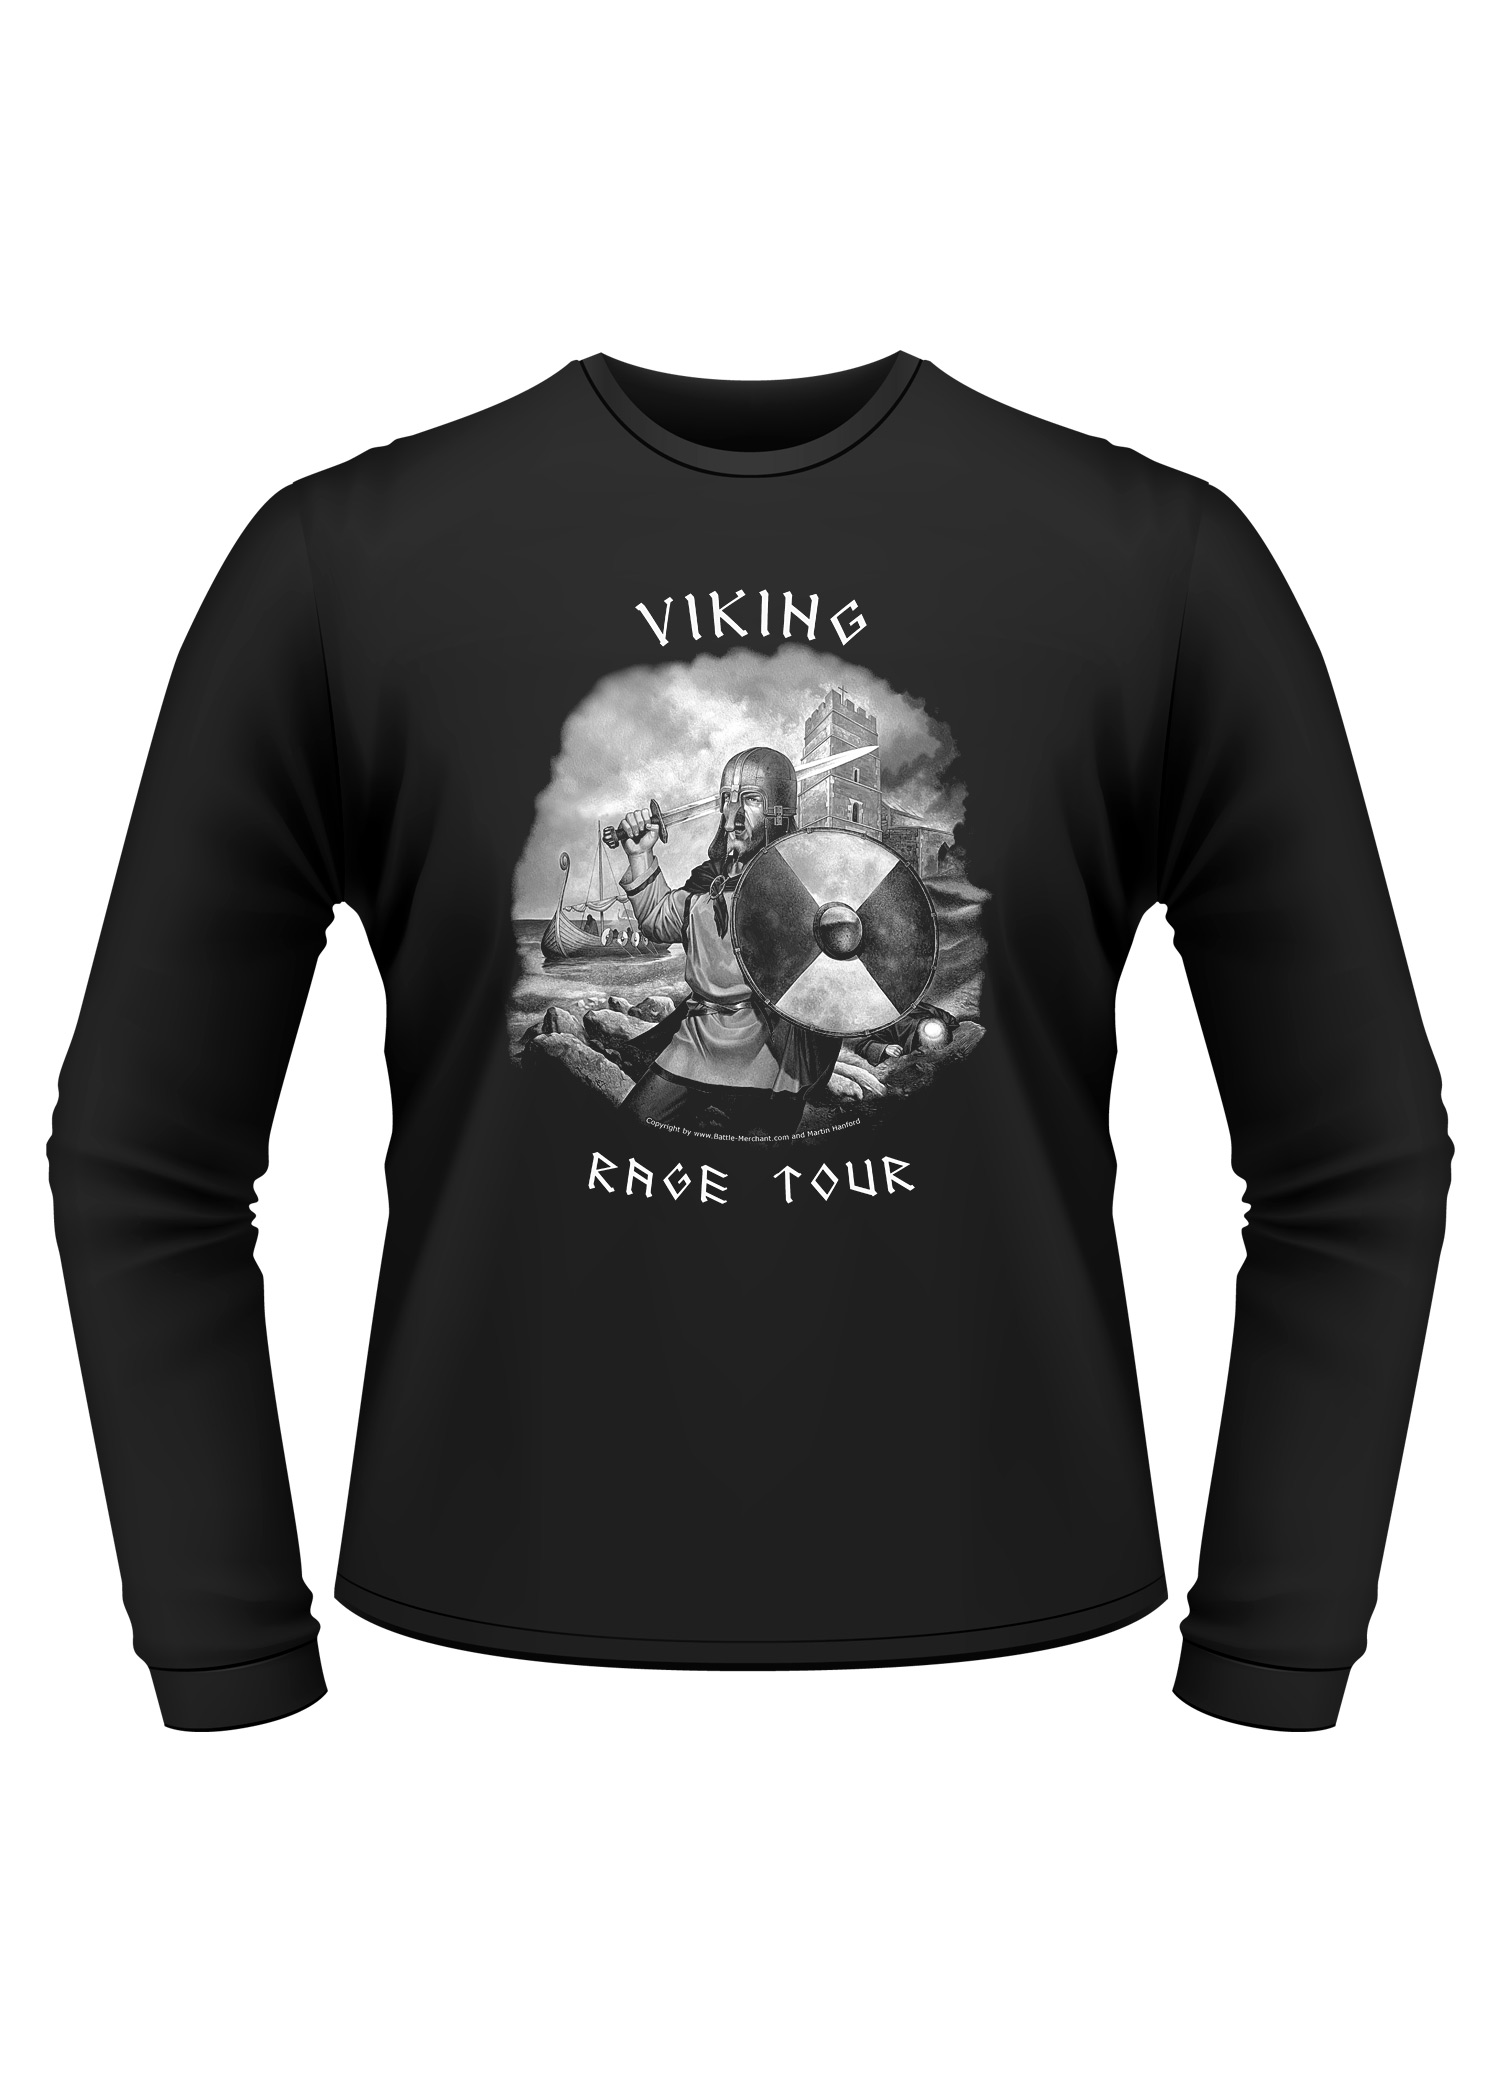 Edda Thorshammer Longsleeve-Shirt: Viking Rage Tour Wikinger LARP Thor 